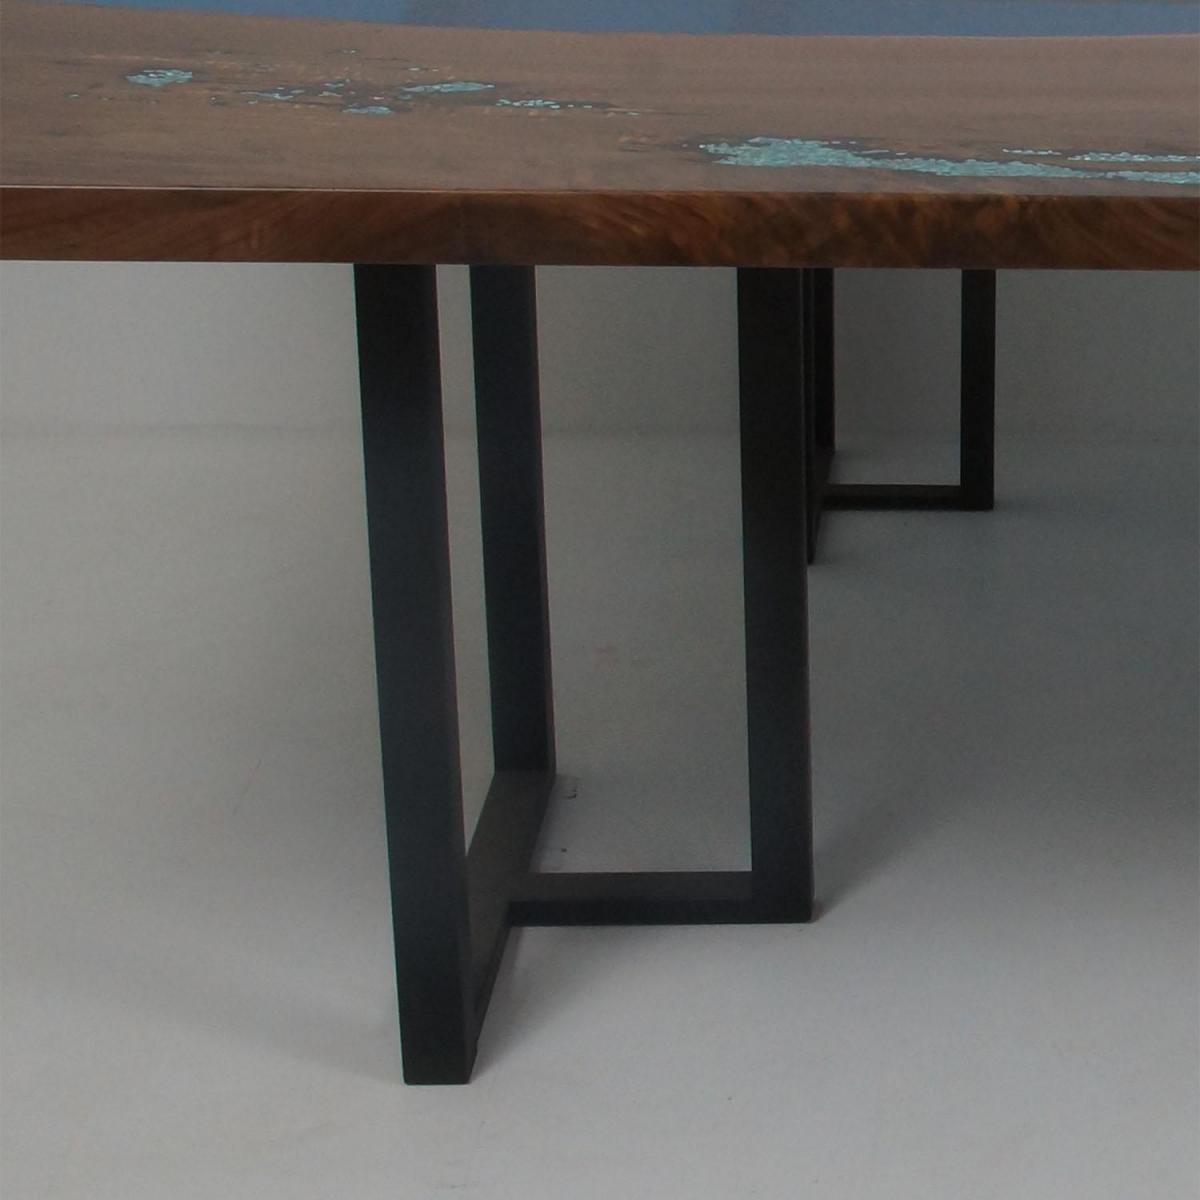 Desk Live Edge Wood Office Desk Decor With Industrial Metal X